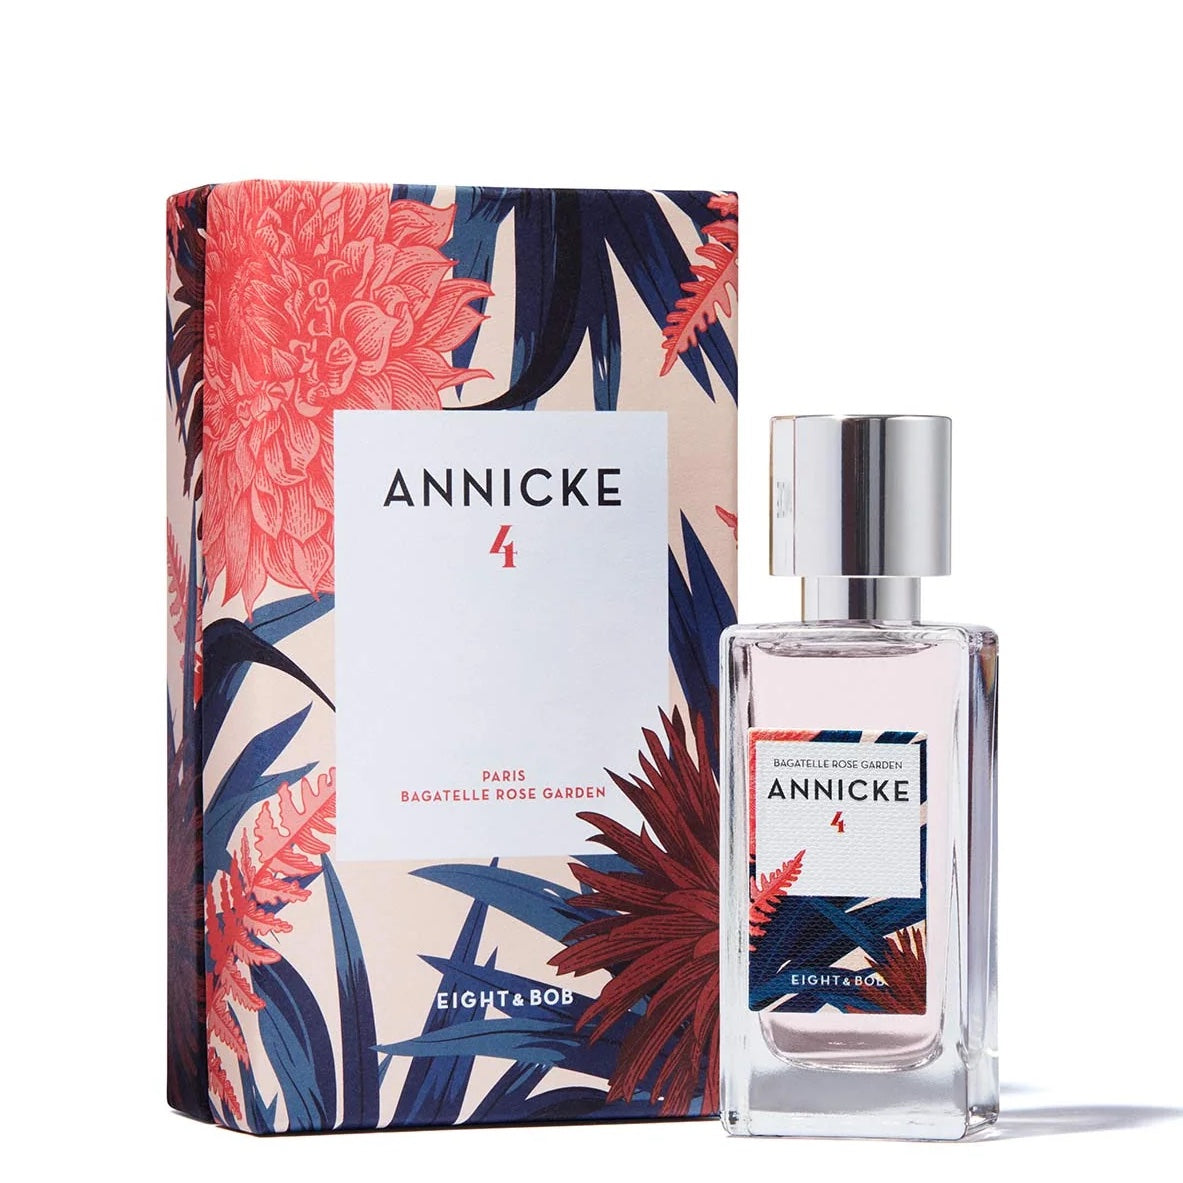 Eight & Bob Annicke 4 Eau de Parfum Travel Size - 30ml